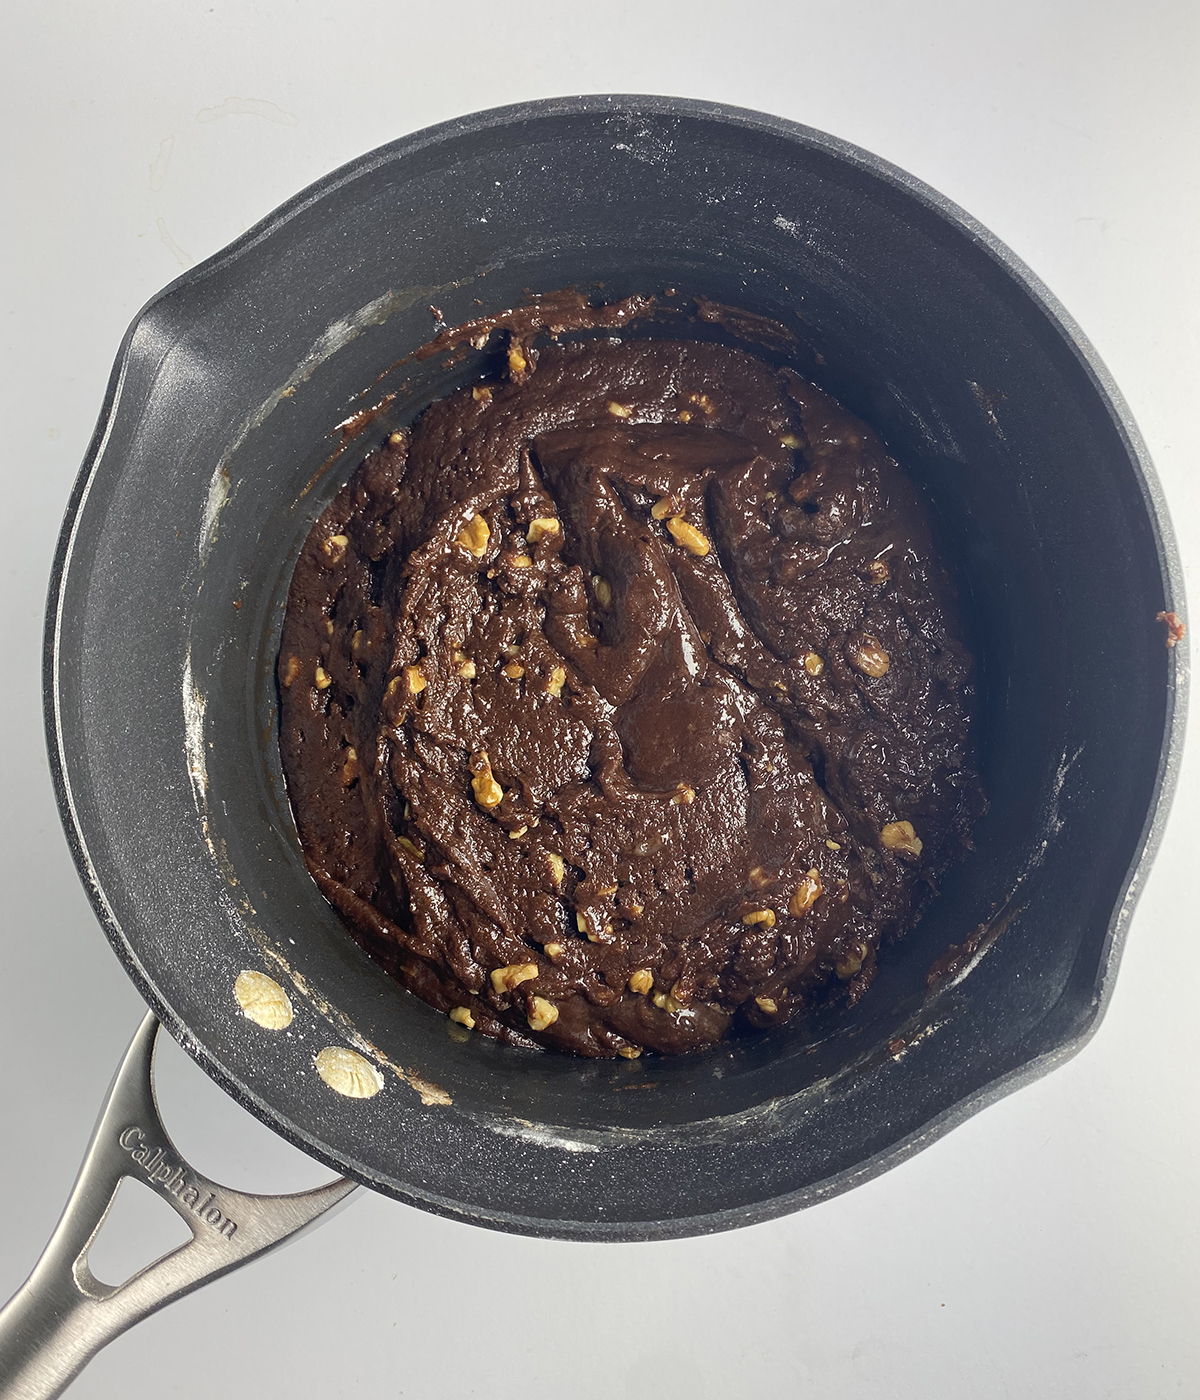 Pot full of saucepan brownie batter with walnuts.